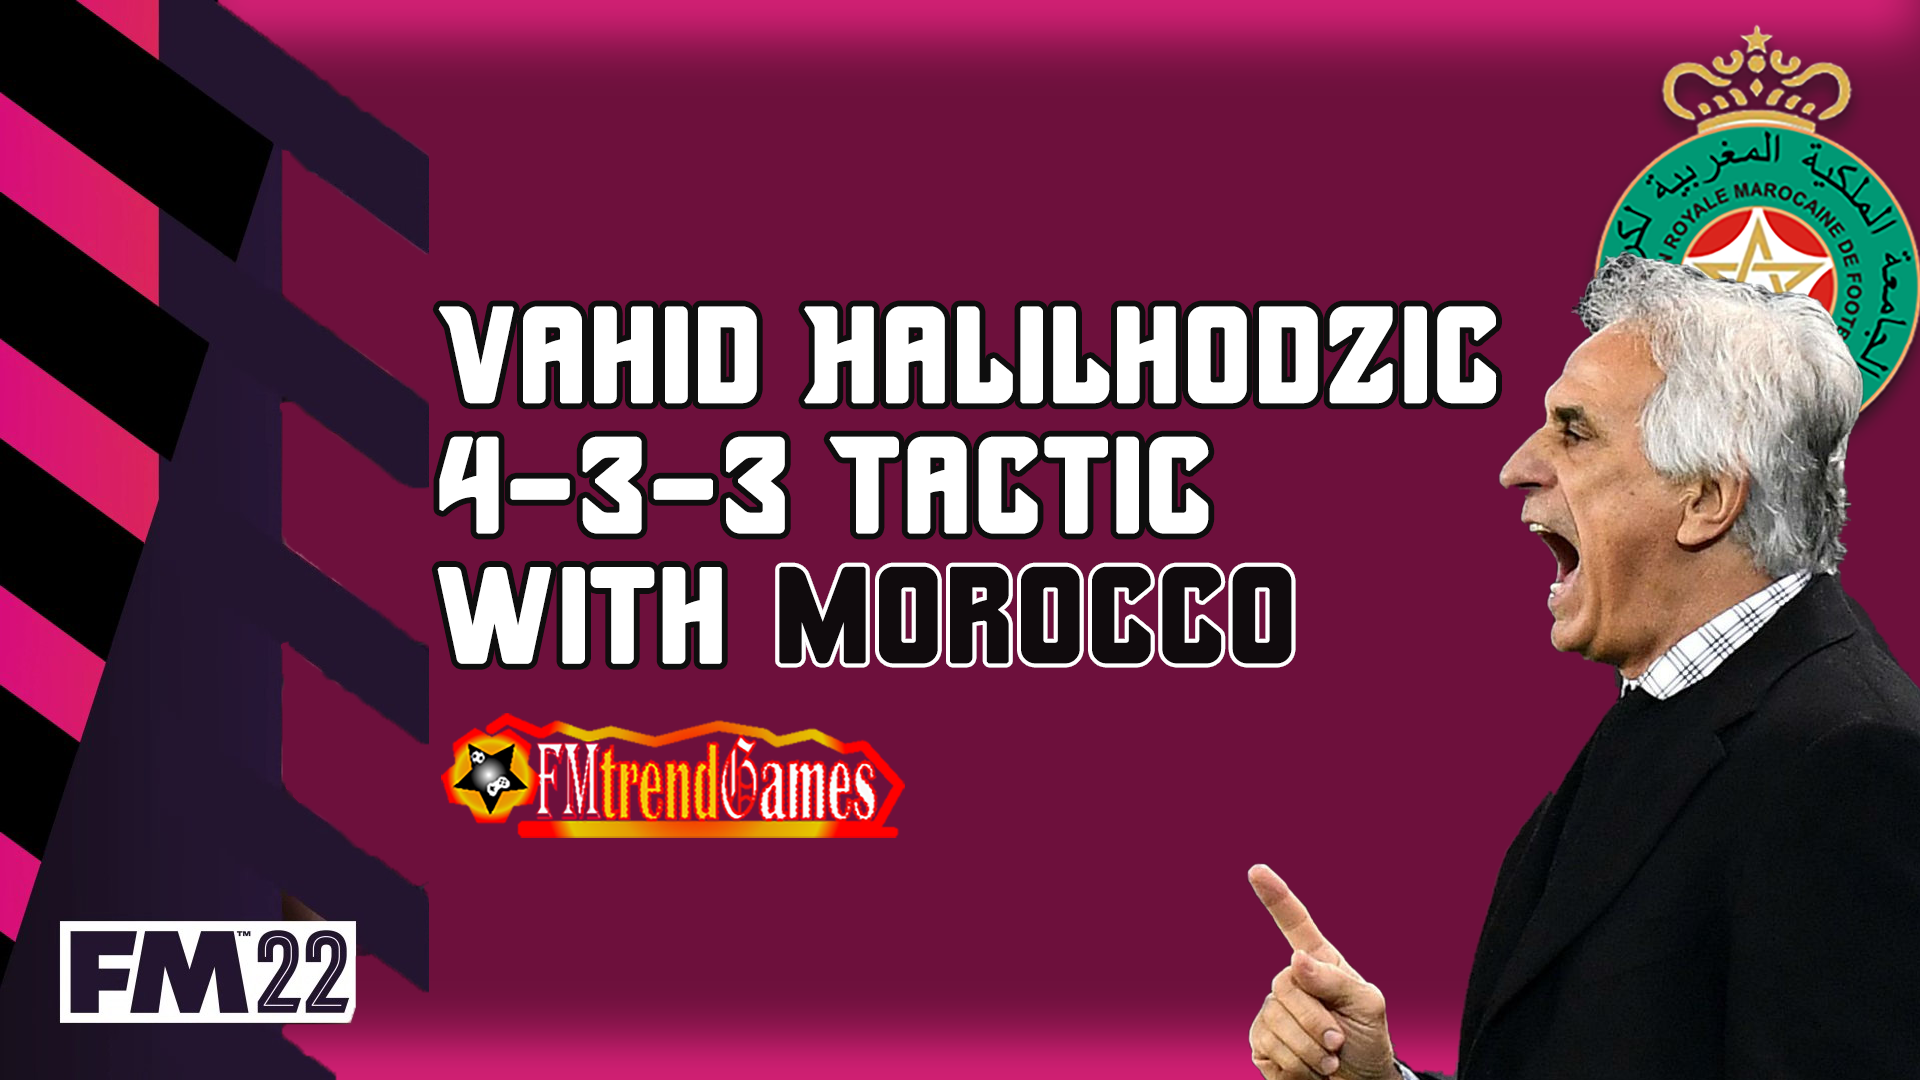 Vahid Halilhodzic 4-3-3 Morocco Tactics